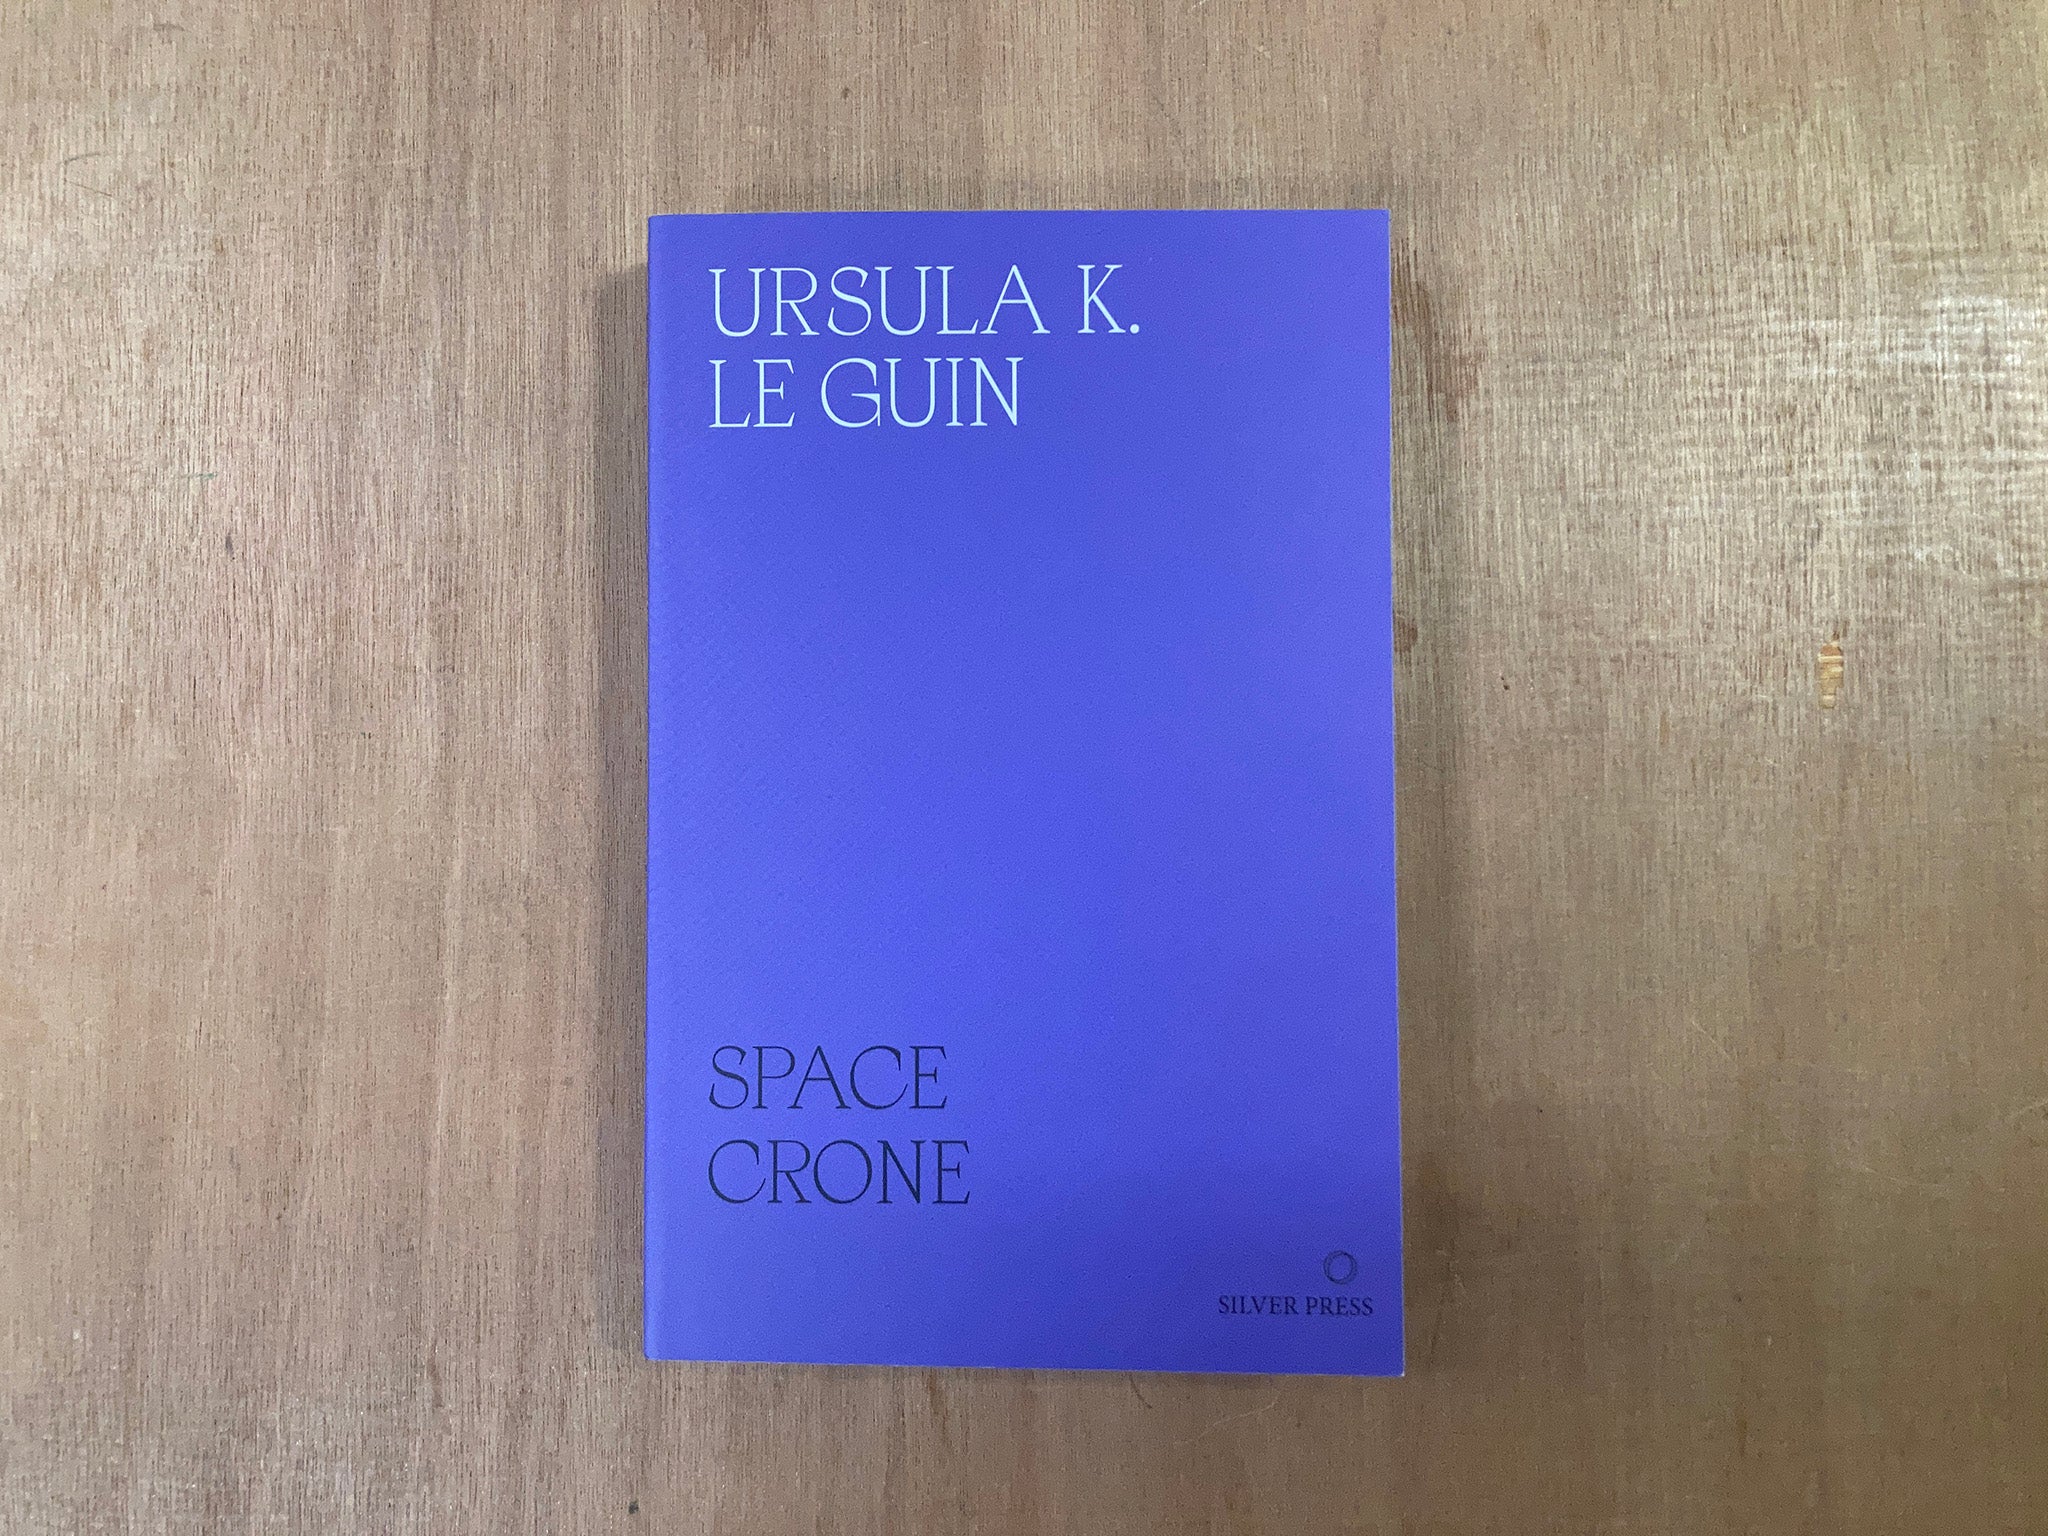 SPACE CRONE by Ursula K. Le Guin